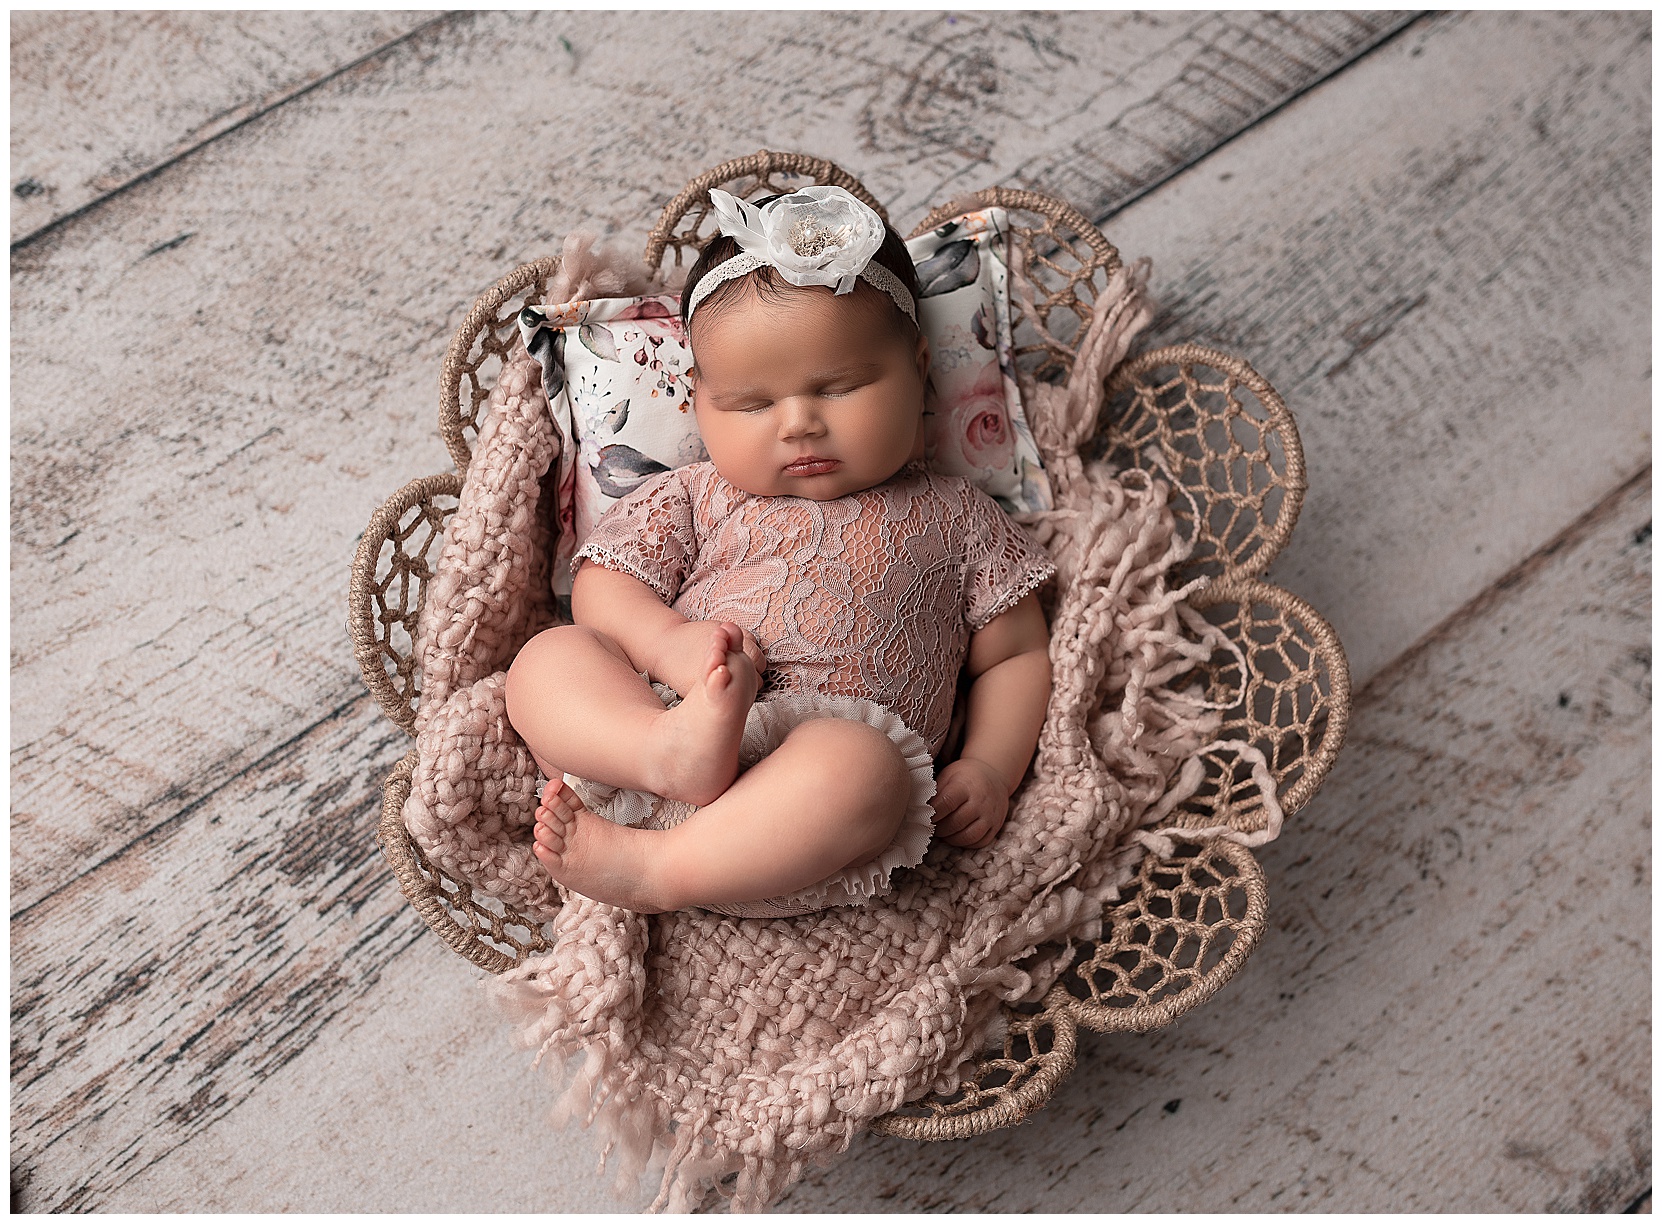 sleeping baby girl wearing a lace romper sleeping in a flower bowl